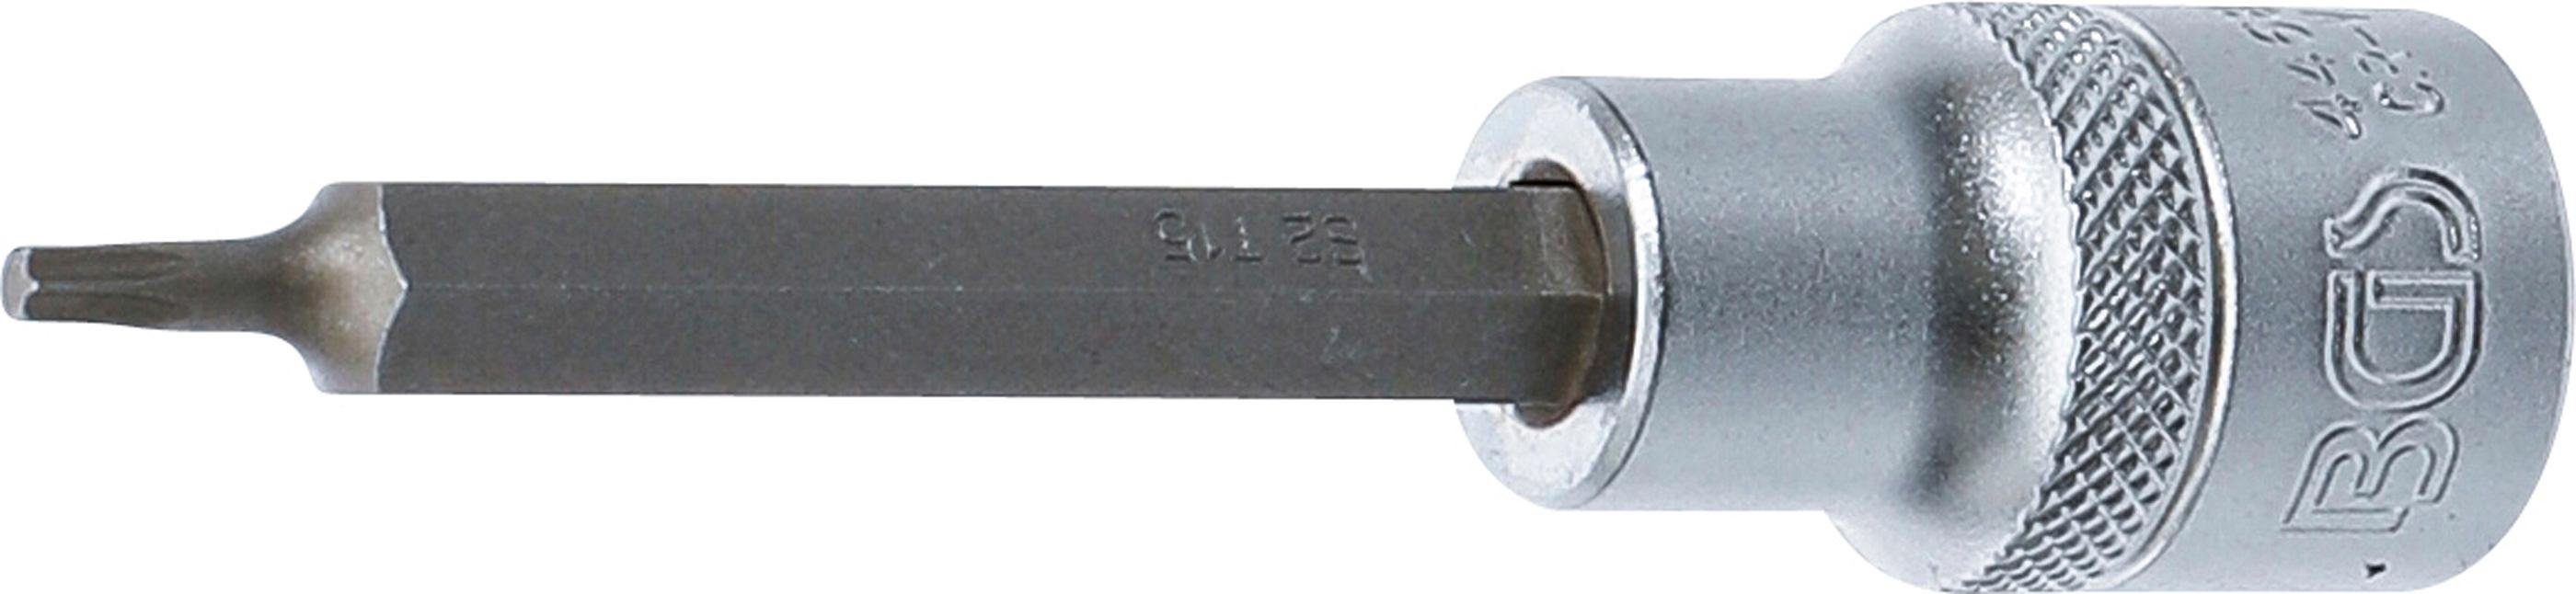 BGS technic Bit-Schraubendreher Bit-Einsatz, Länge 100 mm, Antrieb Innenvierkant 12,5 mm (1/2), T-Profil (für Torx) T15